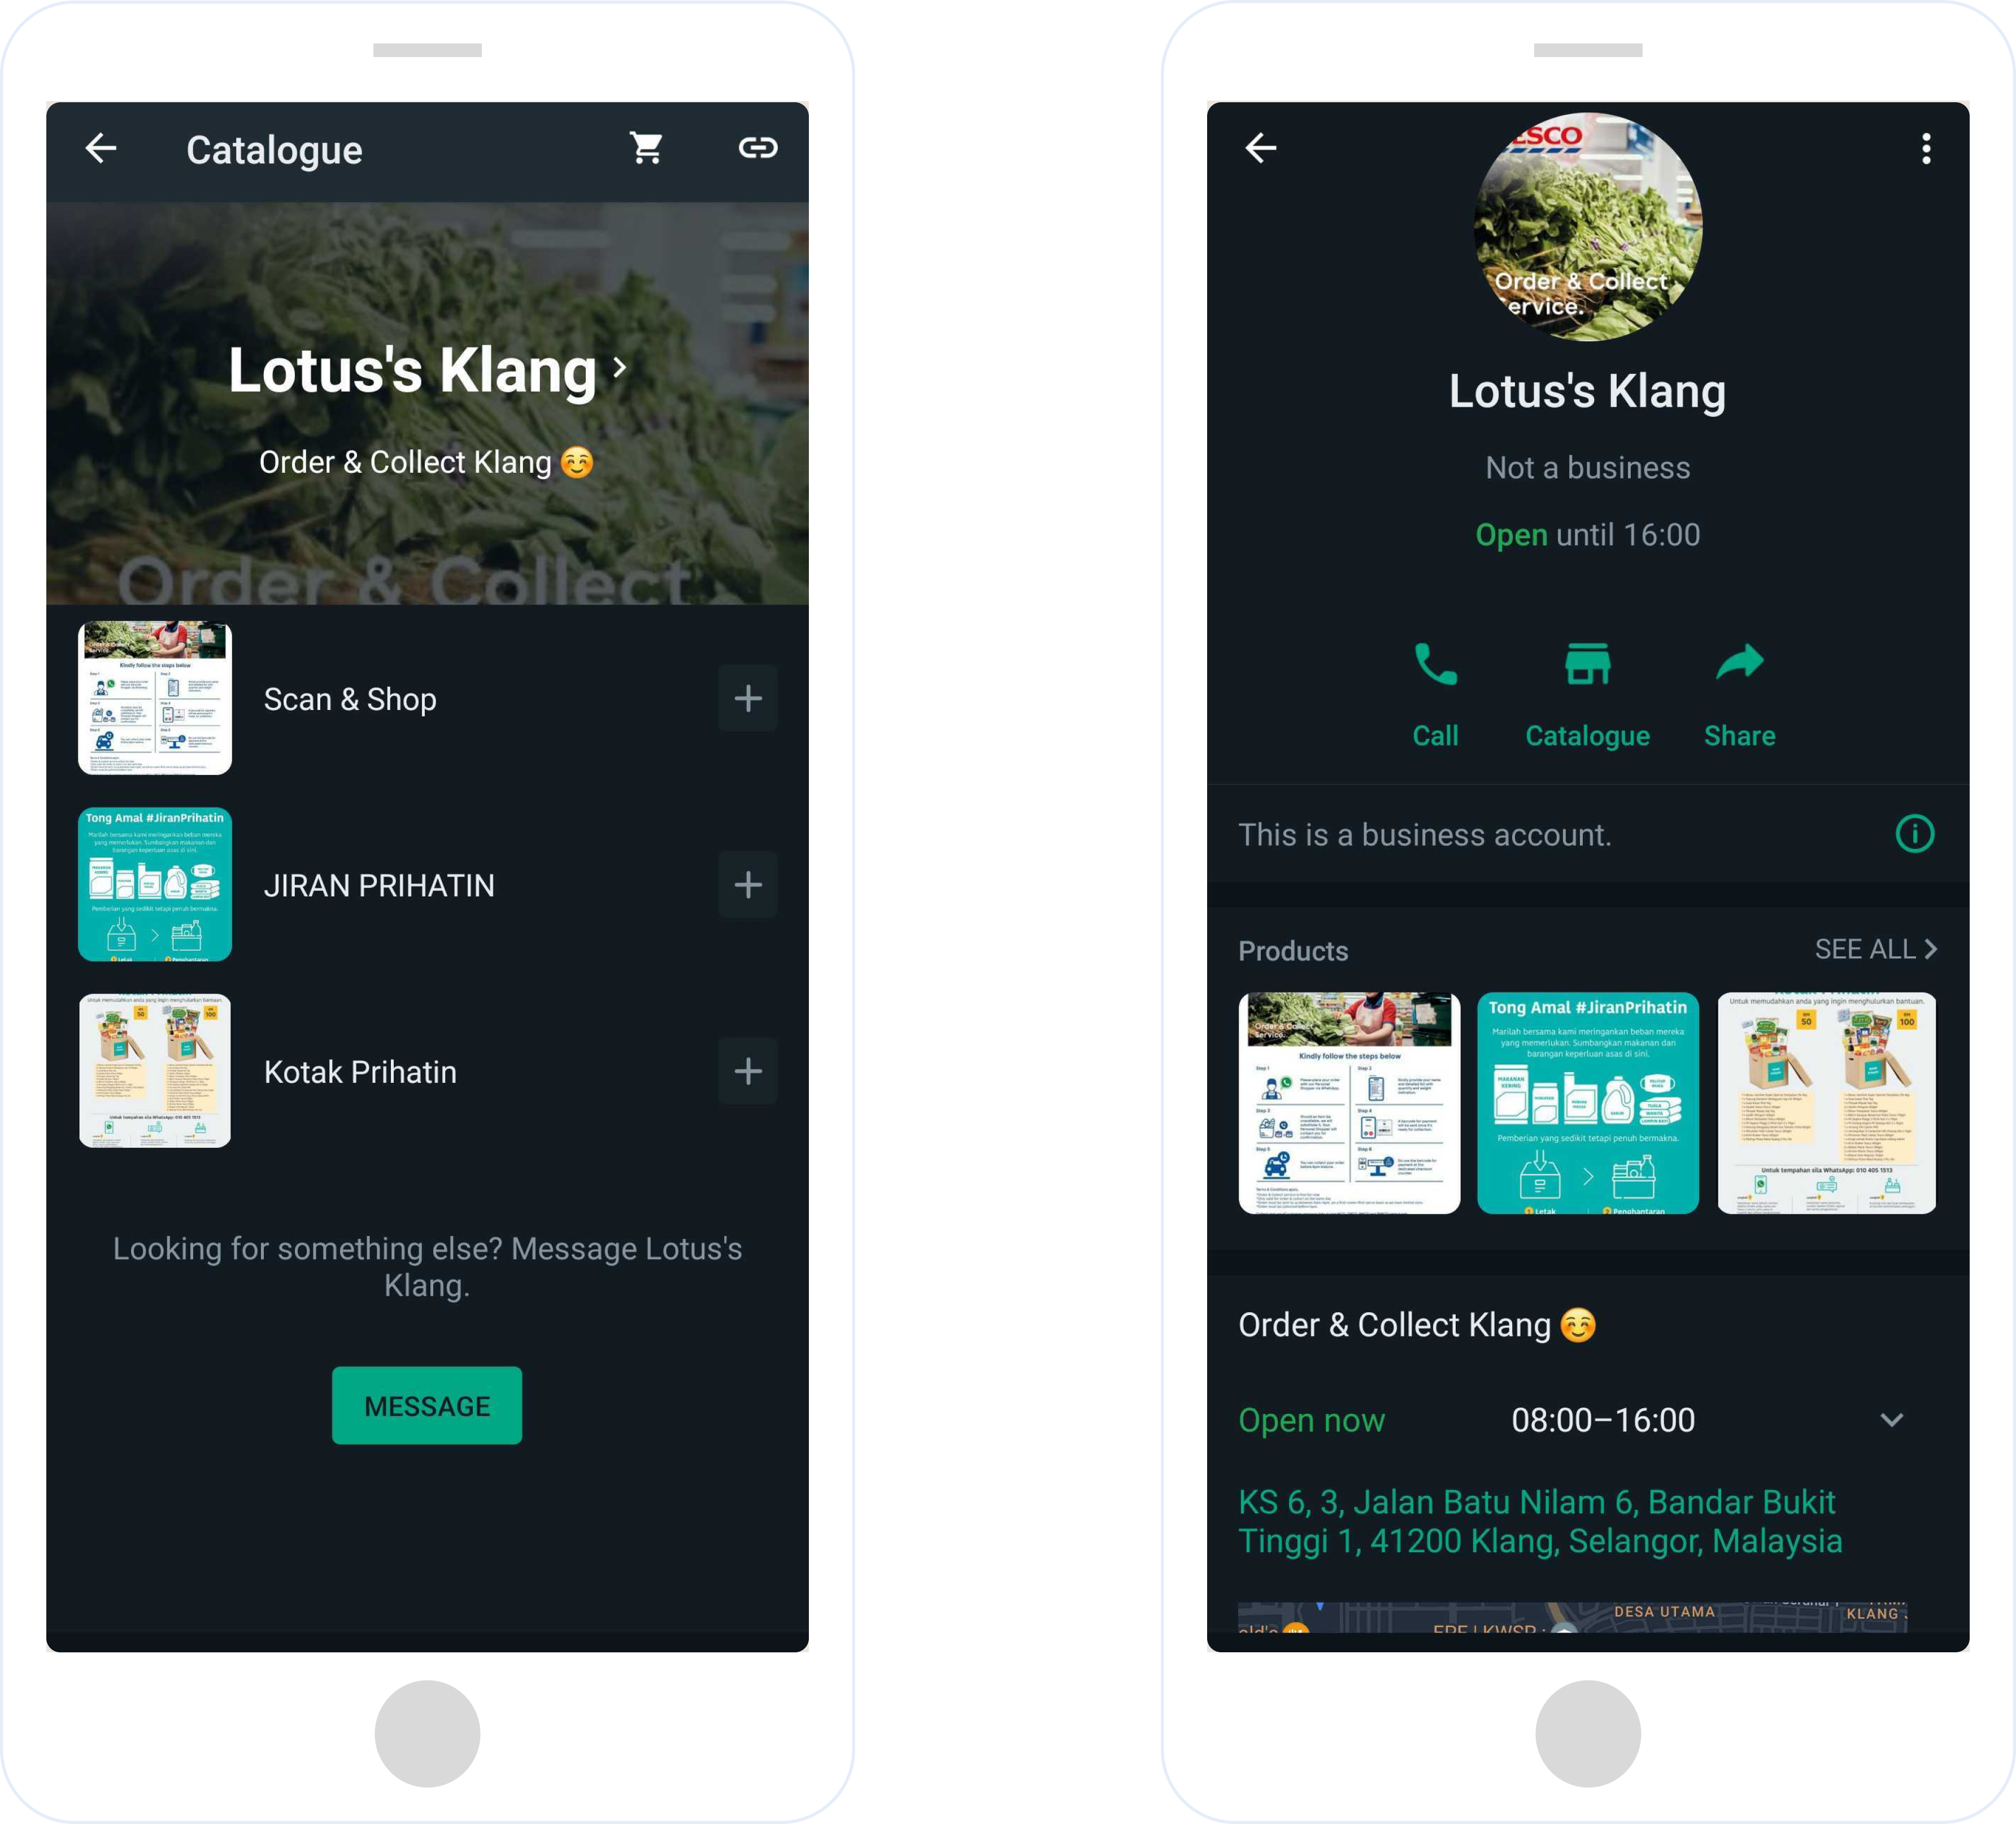 WhatsApp Business profile of Lotus's Klang